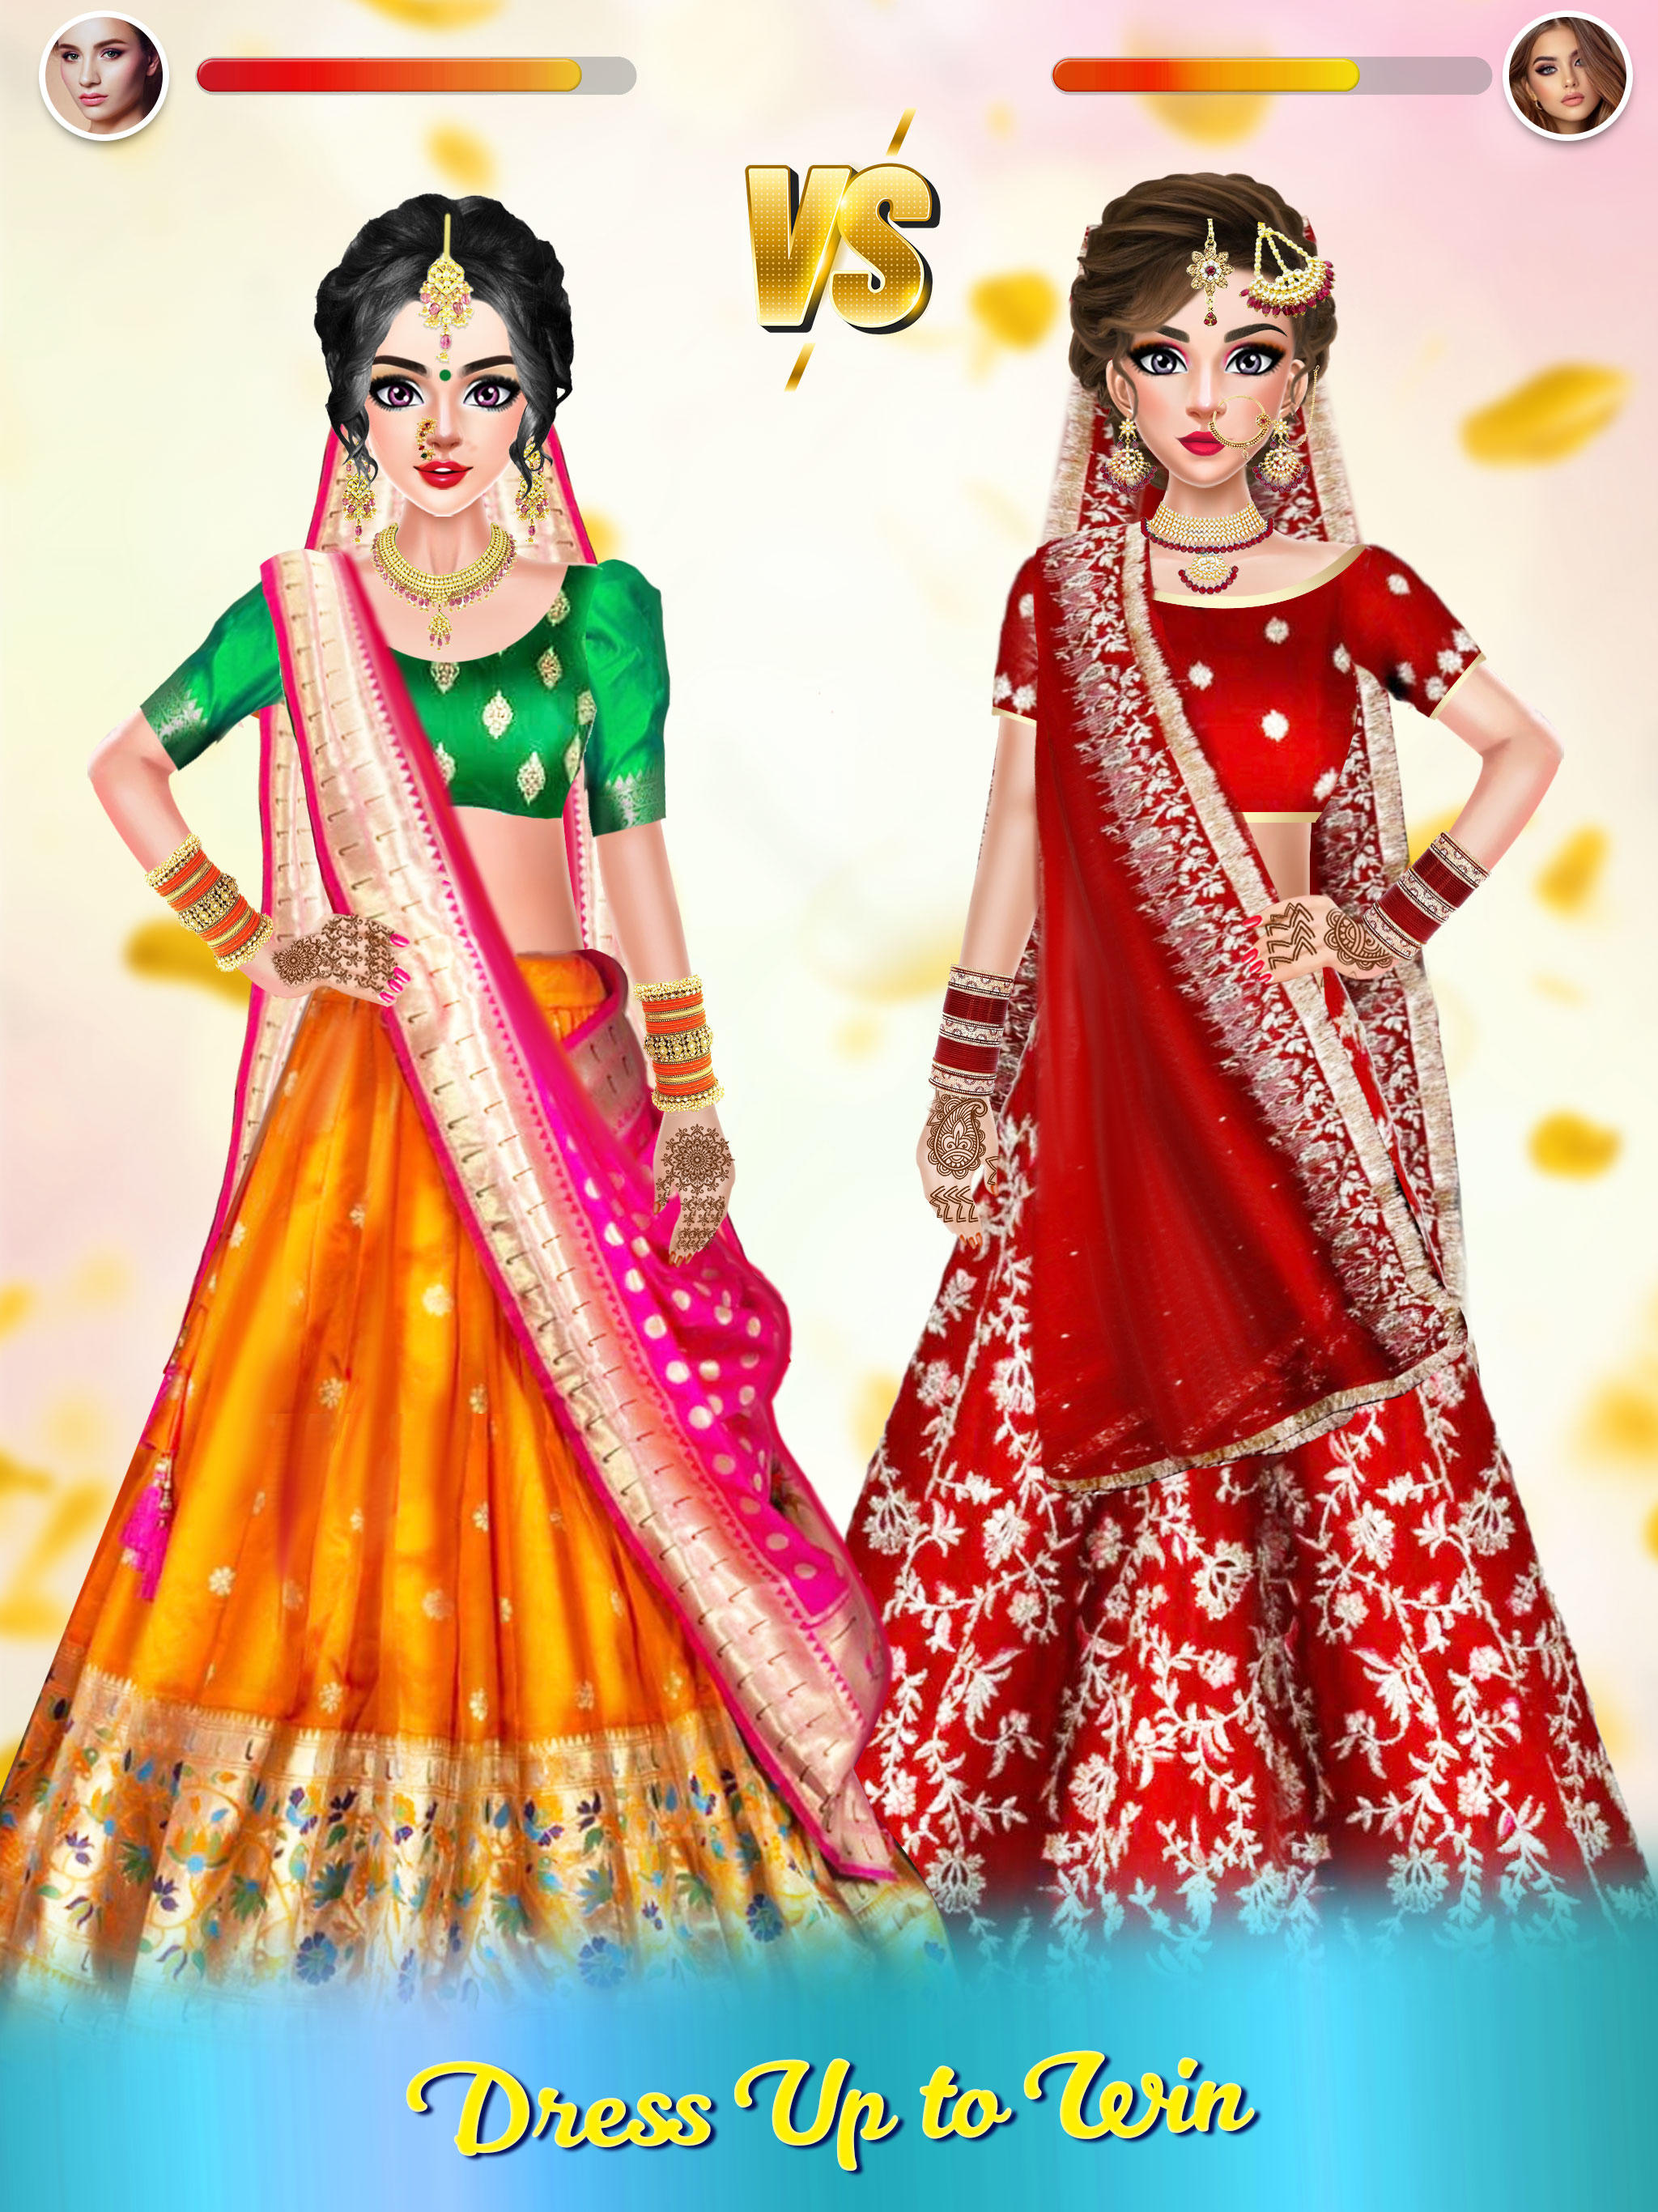 New Designs of Bridal Lehenga | Fashion Clothing Today | Indian bridal wear,  Indian bridal dress, Indian wedding dress traditional